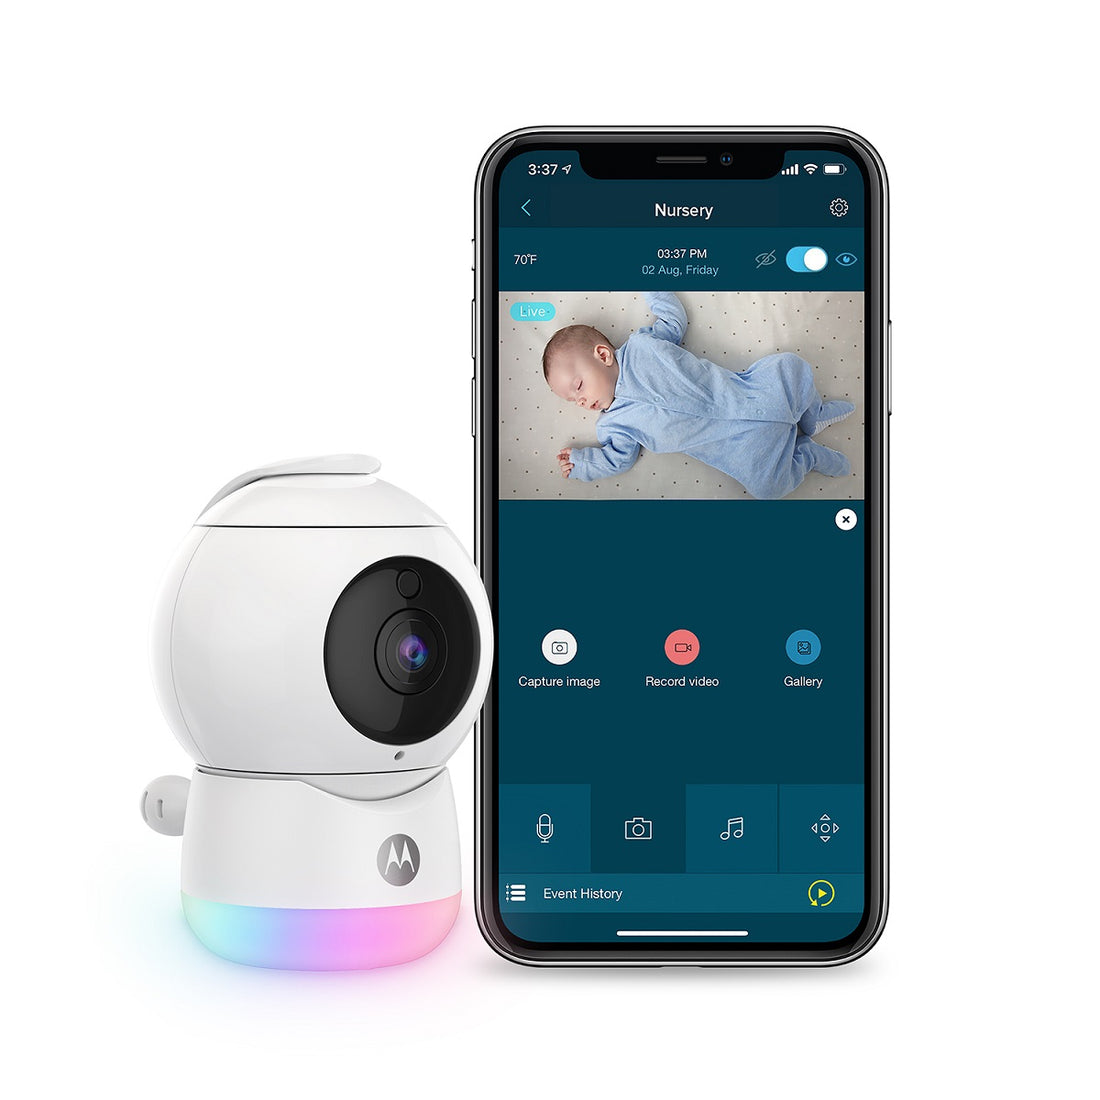 Motorola Peekaboo Full HD 1080p WiFi Video Baby Camera with Night Light - White (Refurbished)